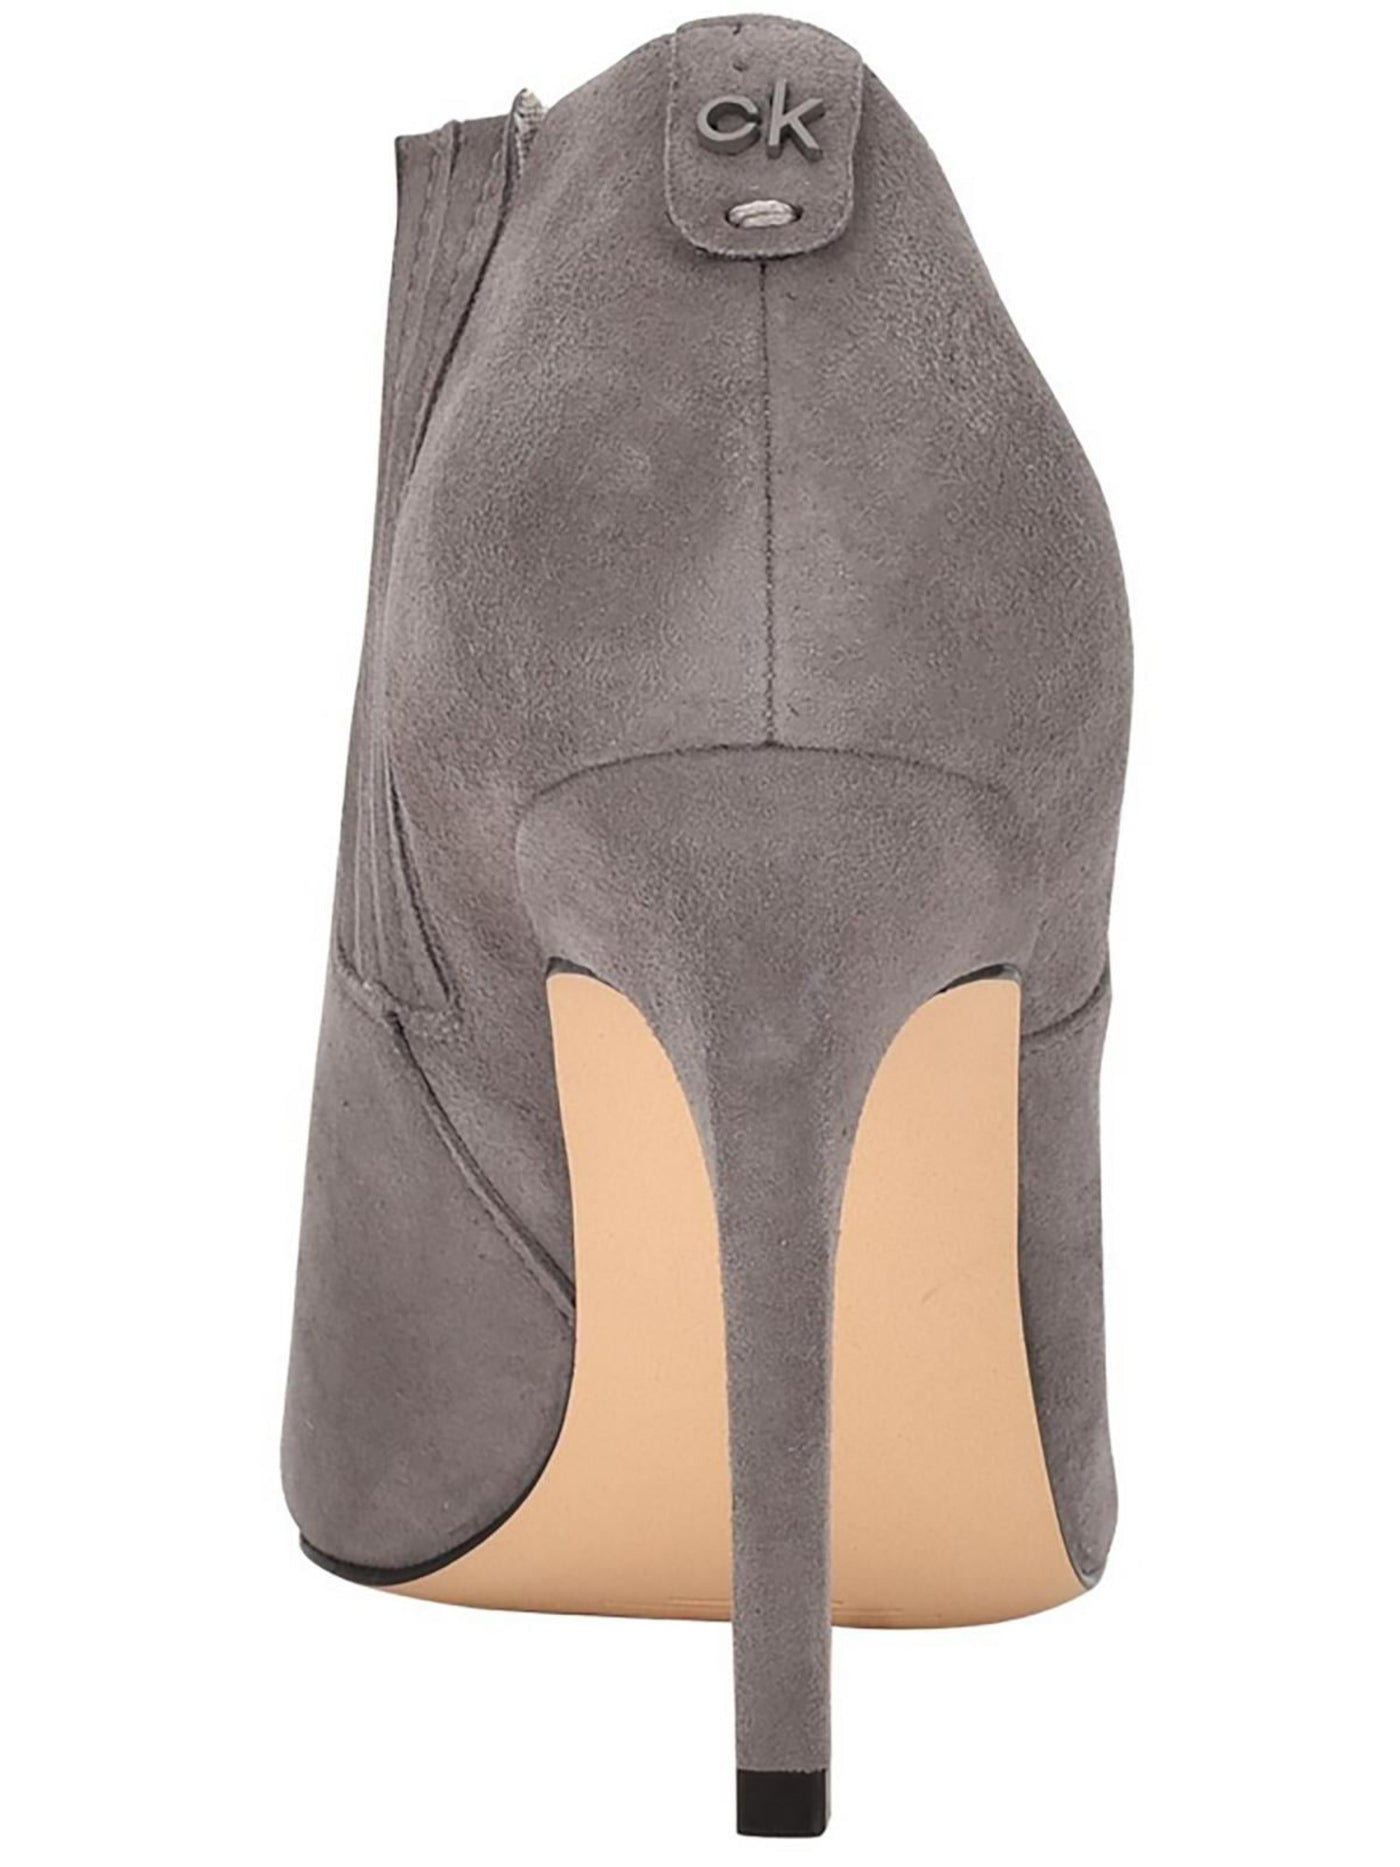 CALVIN KLEIN Womens Gray Padded Goring Asymmetrical Harmon Pointy Toe Stiletto Slip On Leather Dress Booties 6 M